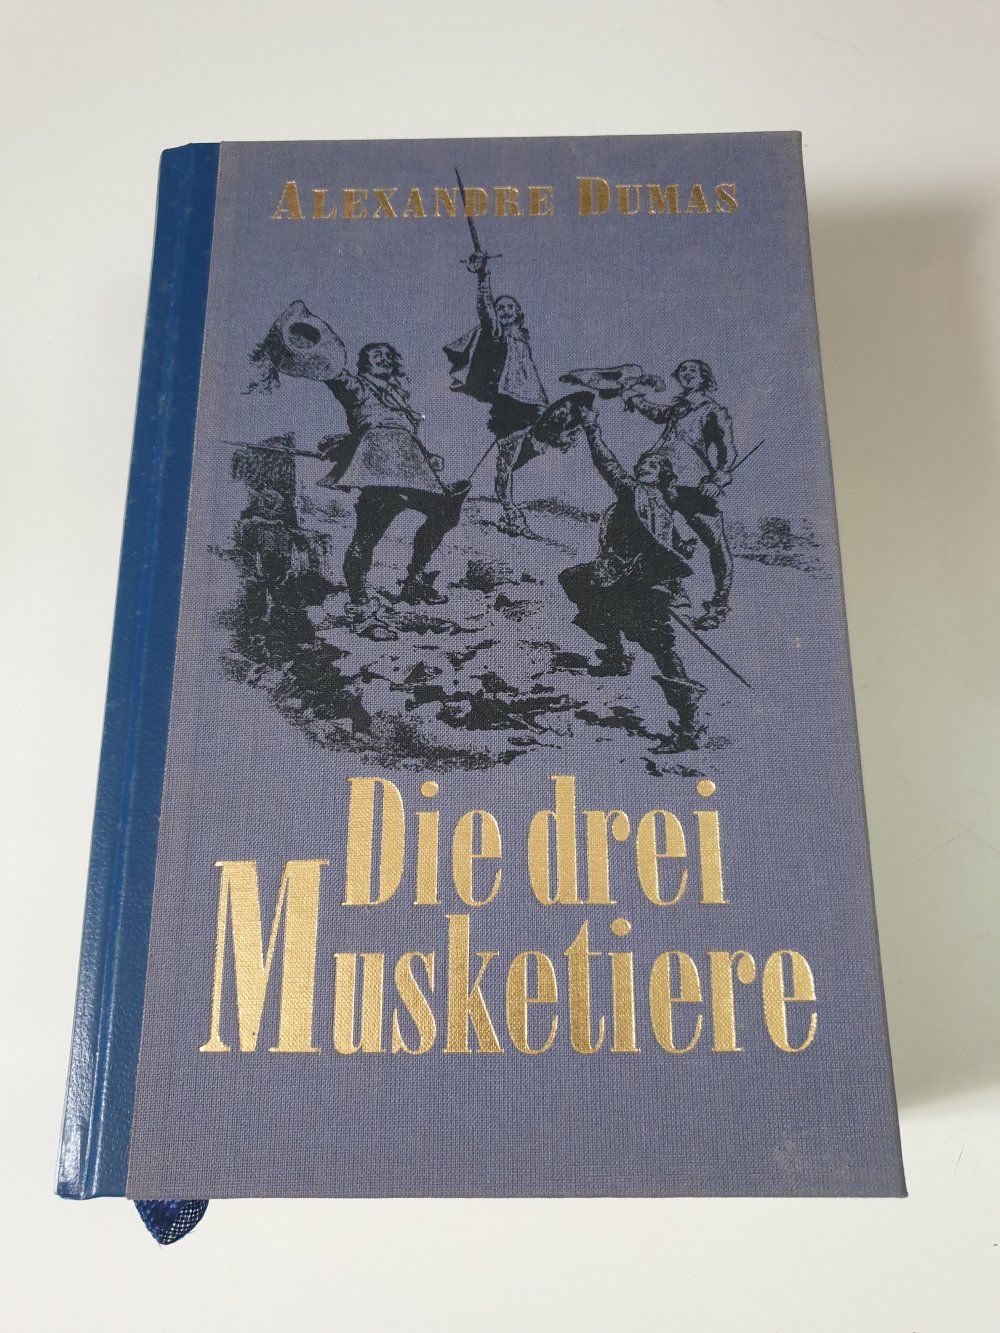 Die drei Musketiere - Alexandre Dumas